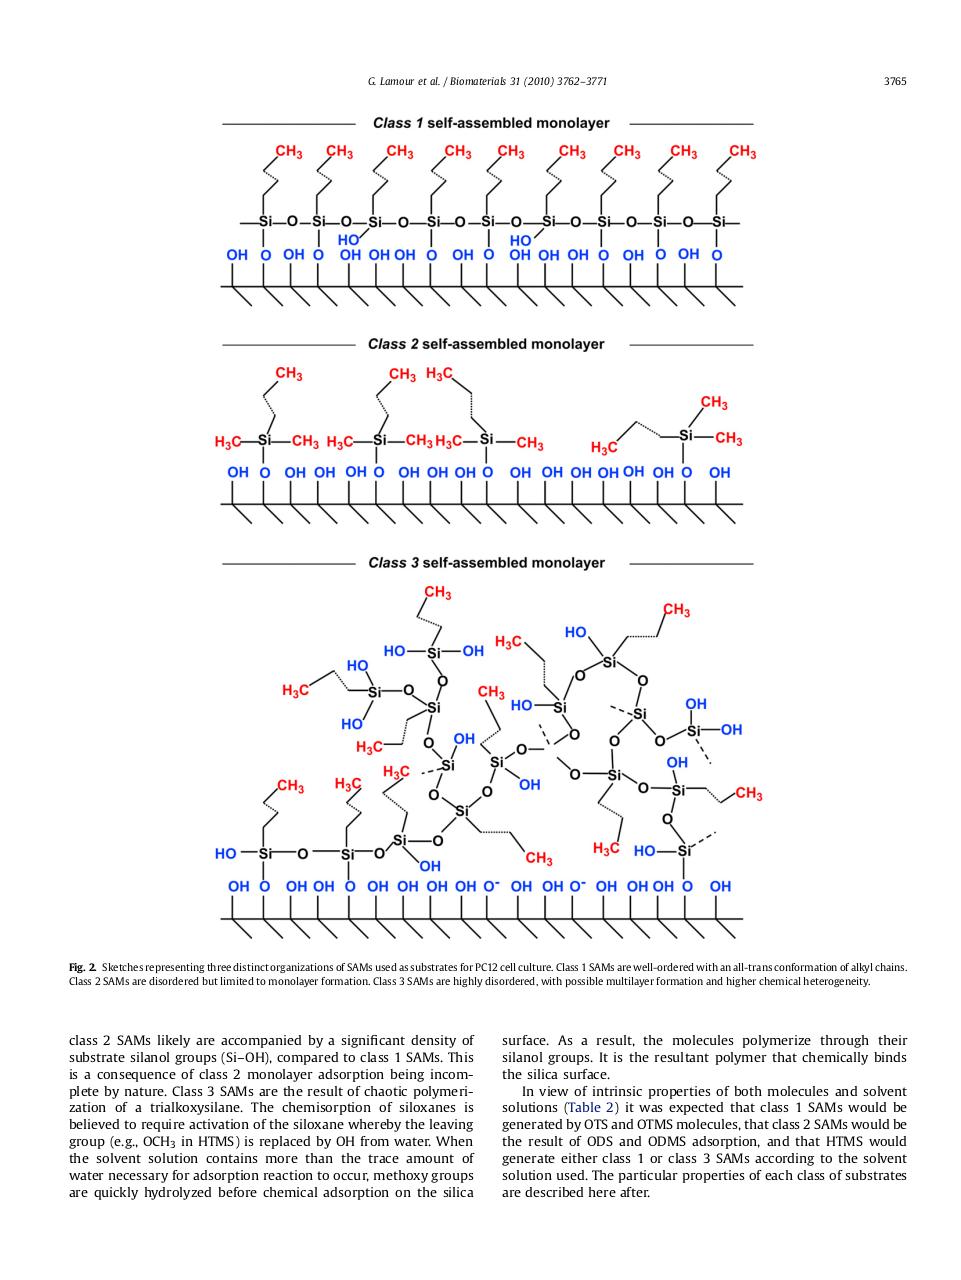 Preview of PDF document lamour-biomat-2010.pdf